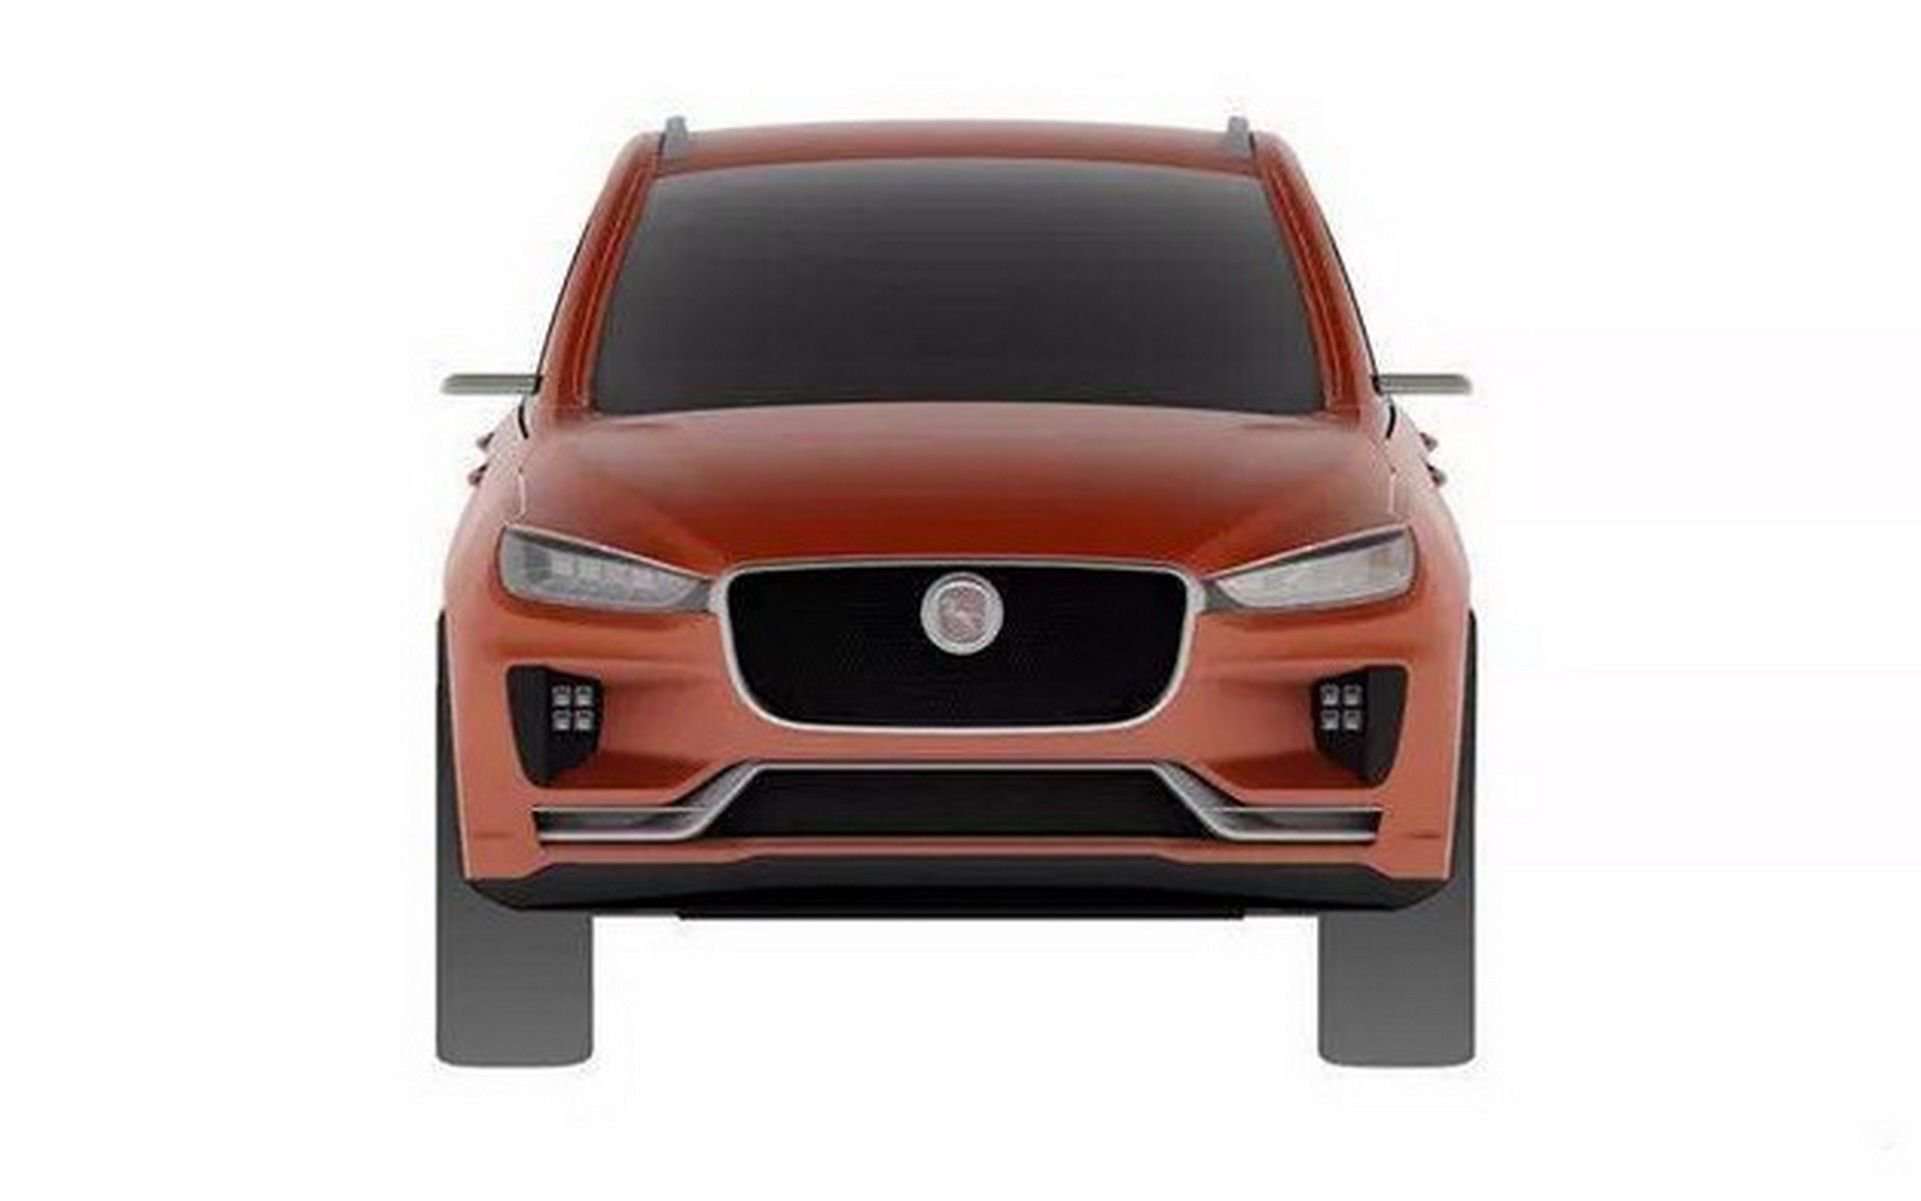 Berita, Hanteng SUV: Hanteng SUV : Jaguar F-PACE Versi KW China